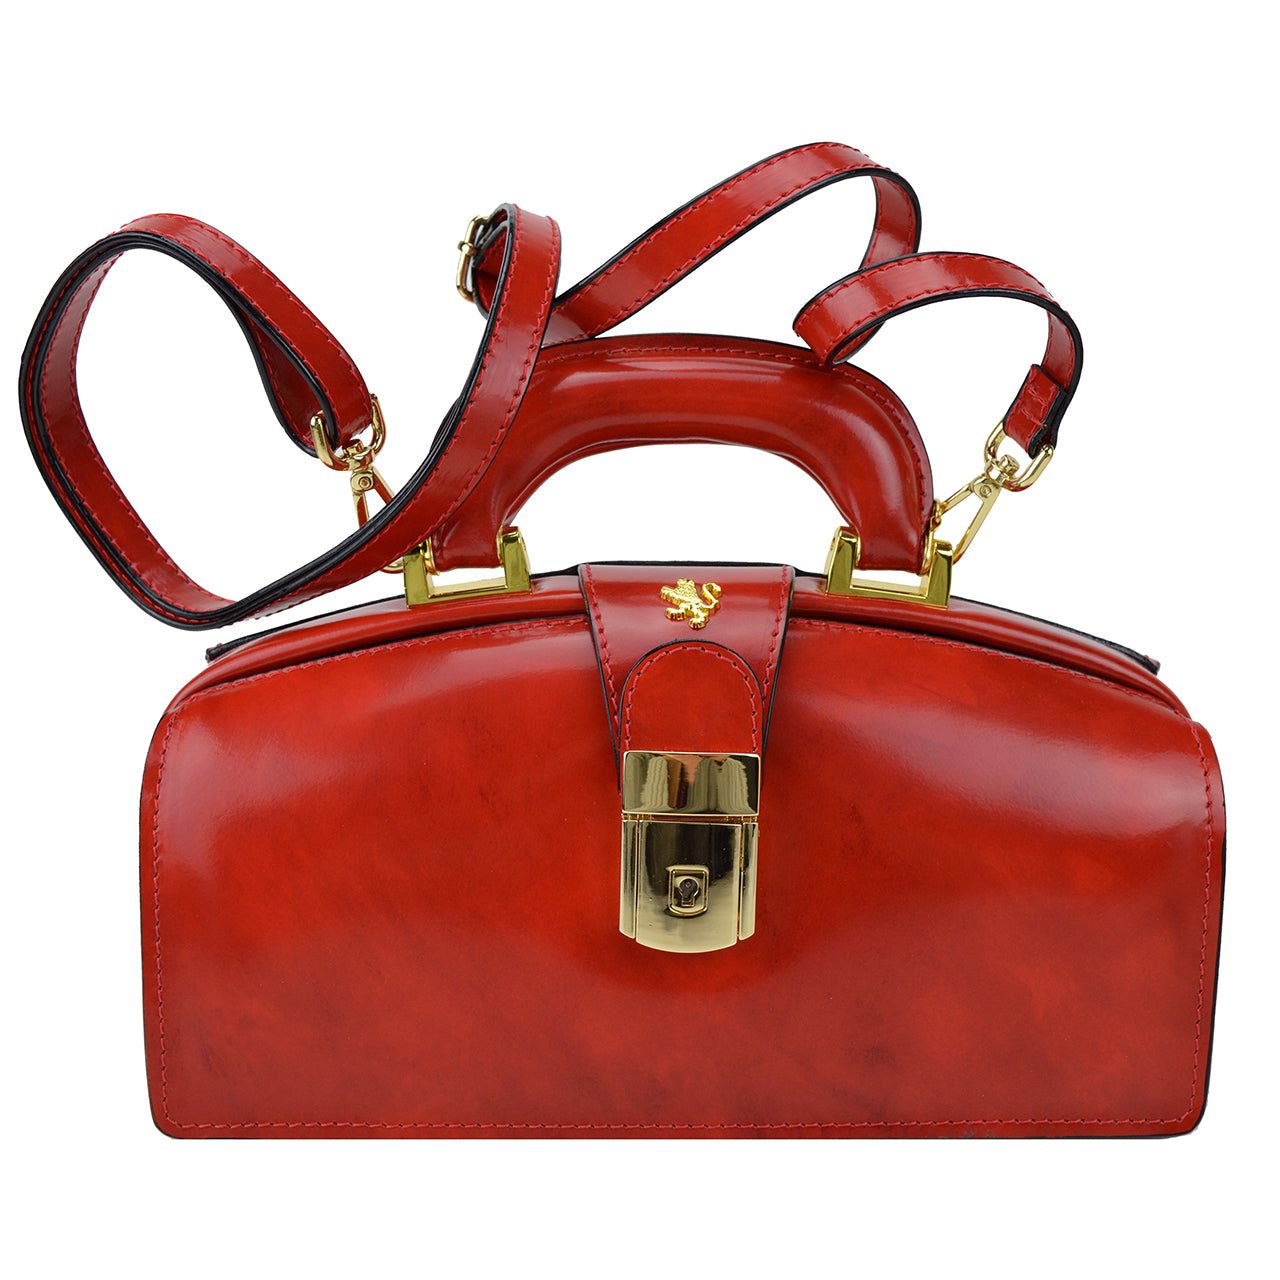 Pratesi Lady Brunelleschi Bag in genuine Italian leather